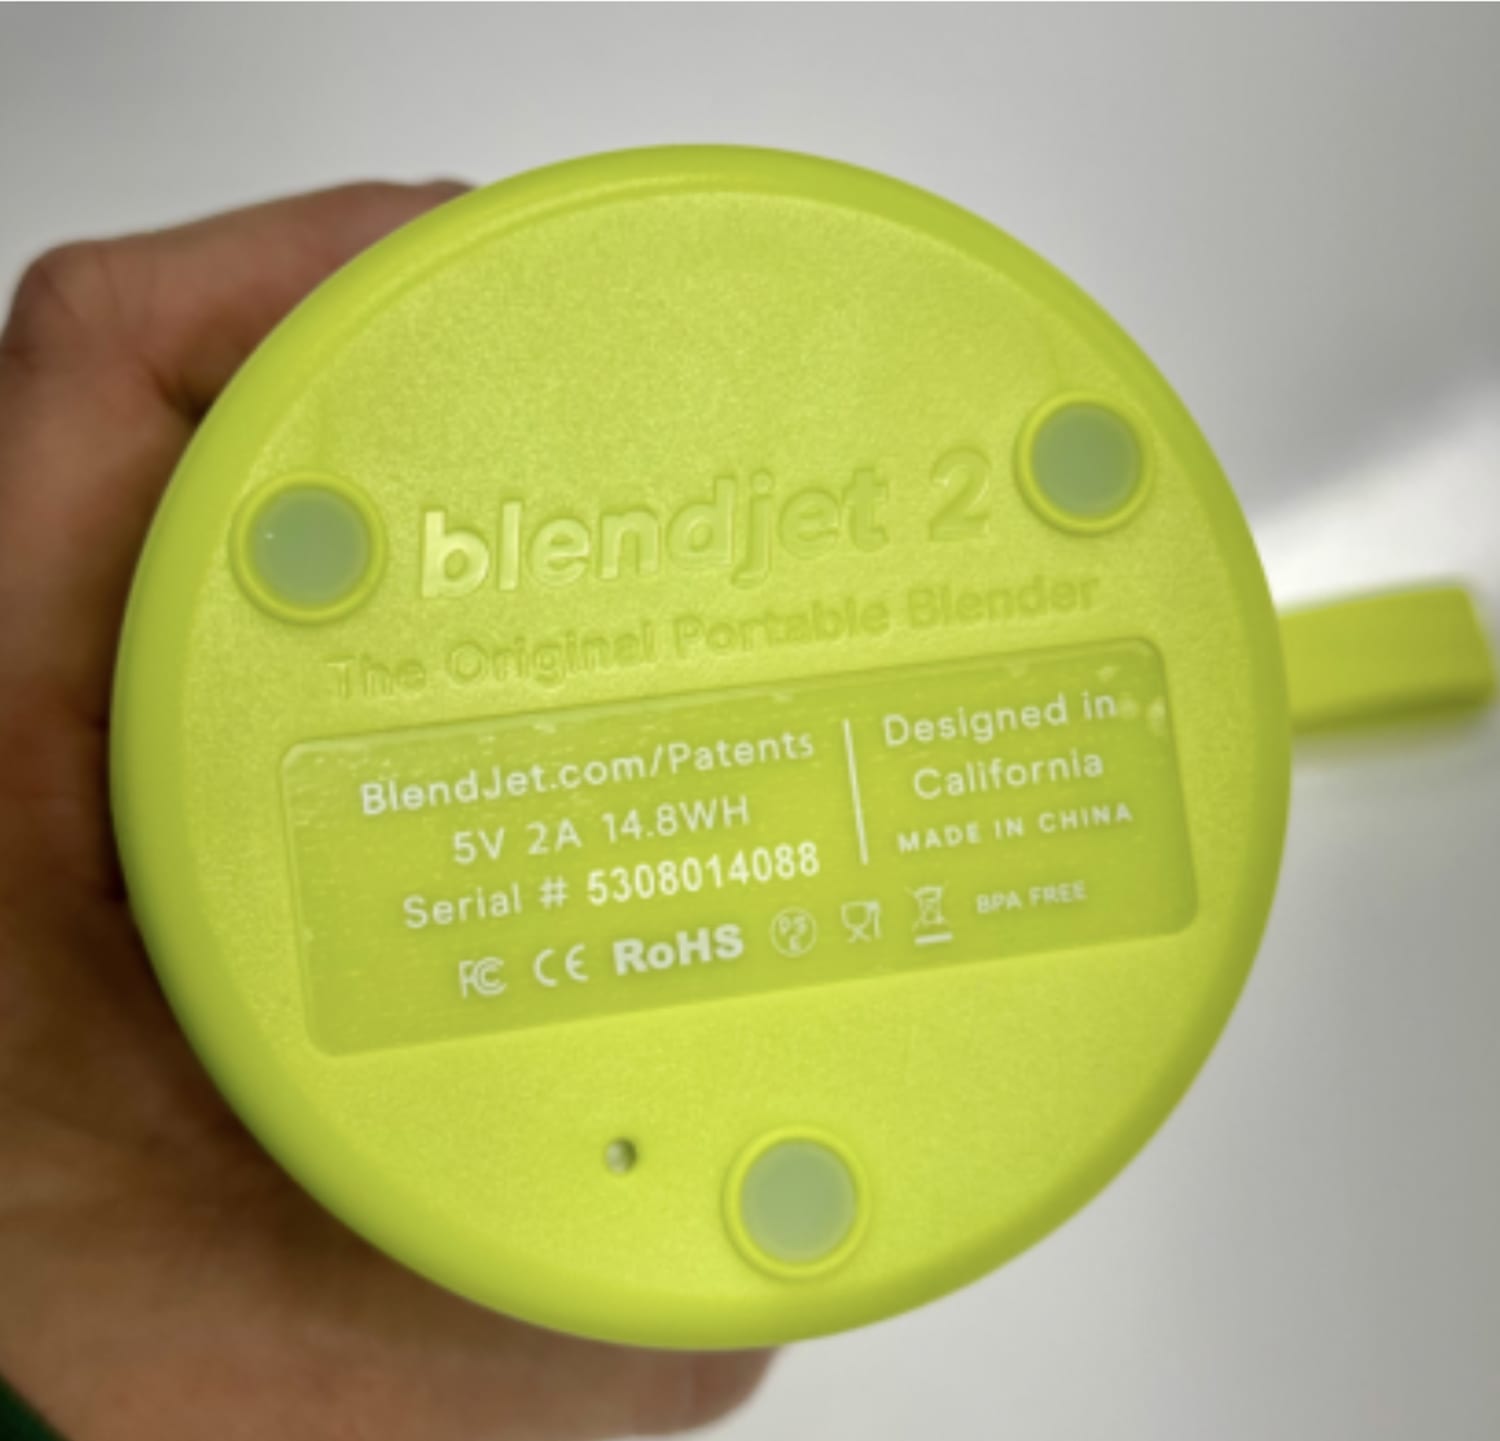 Popular BlendJet Portable Blender May Pose Risks - Consumer Reports